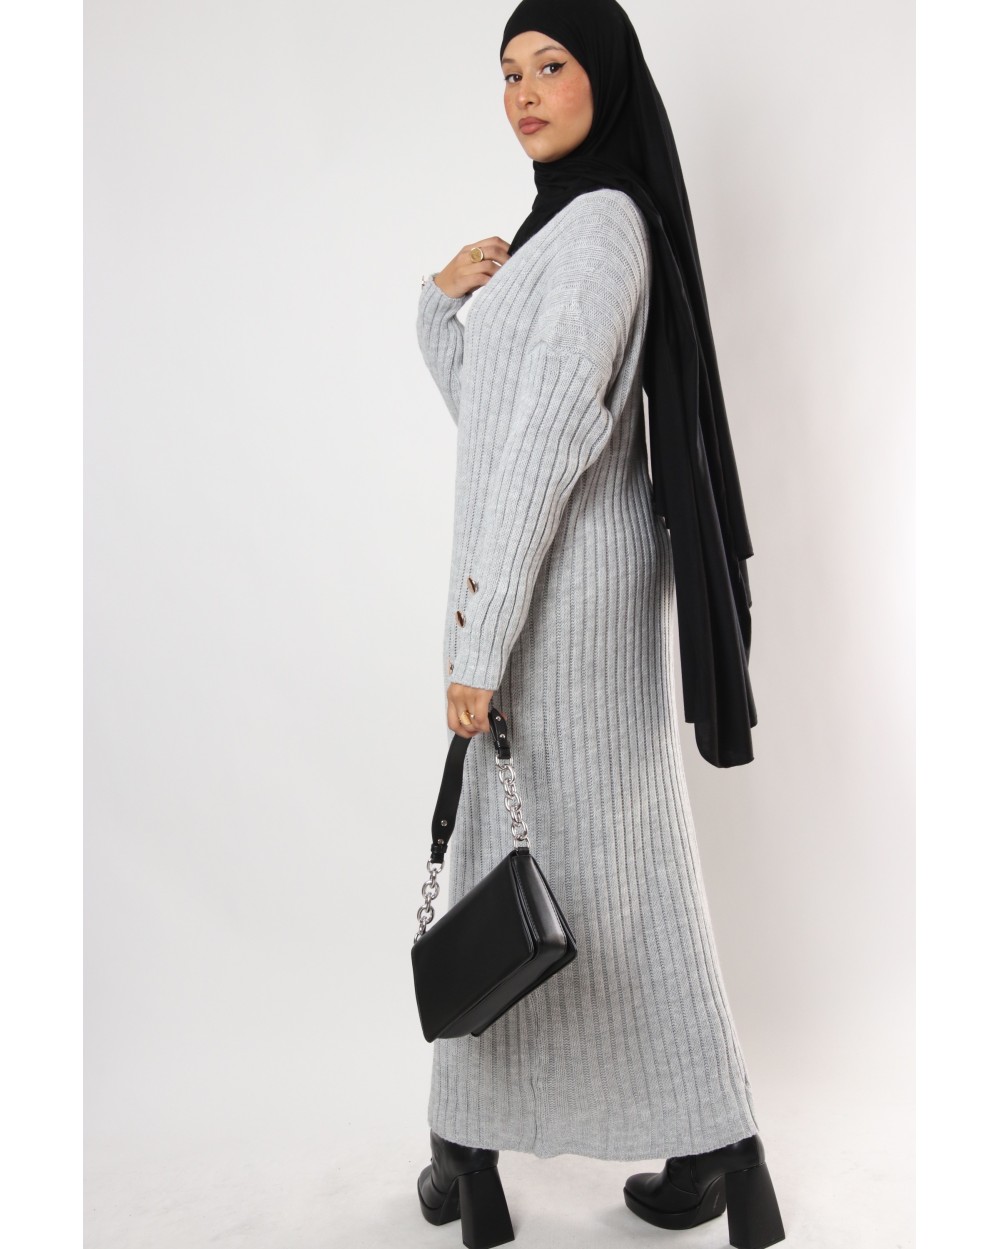 Rexilia sweater dress